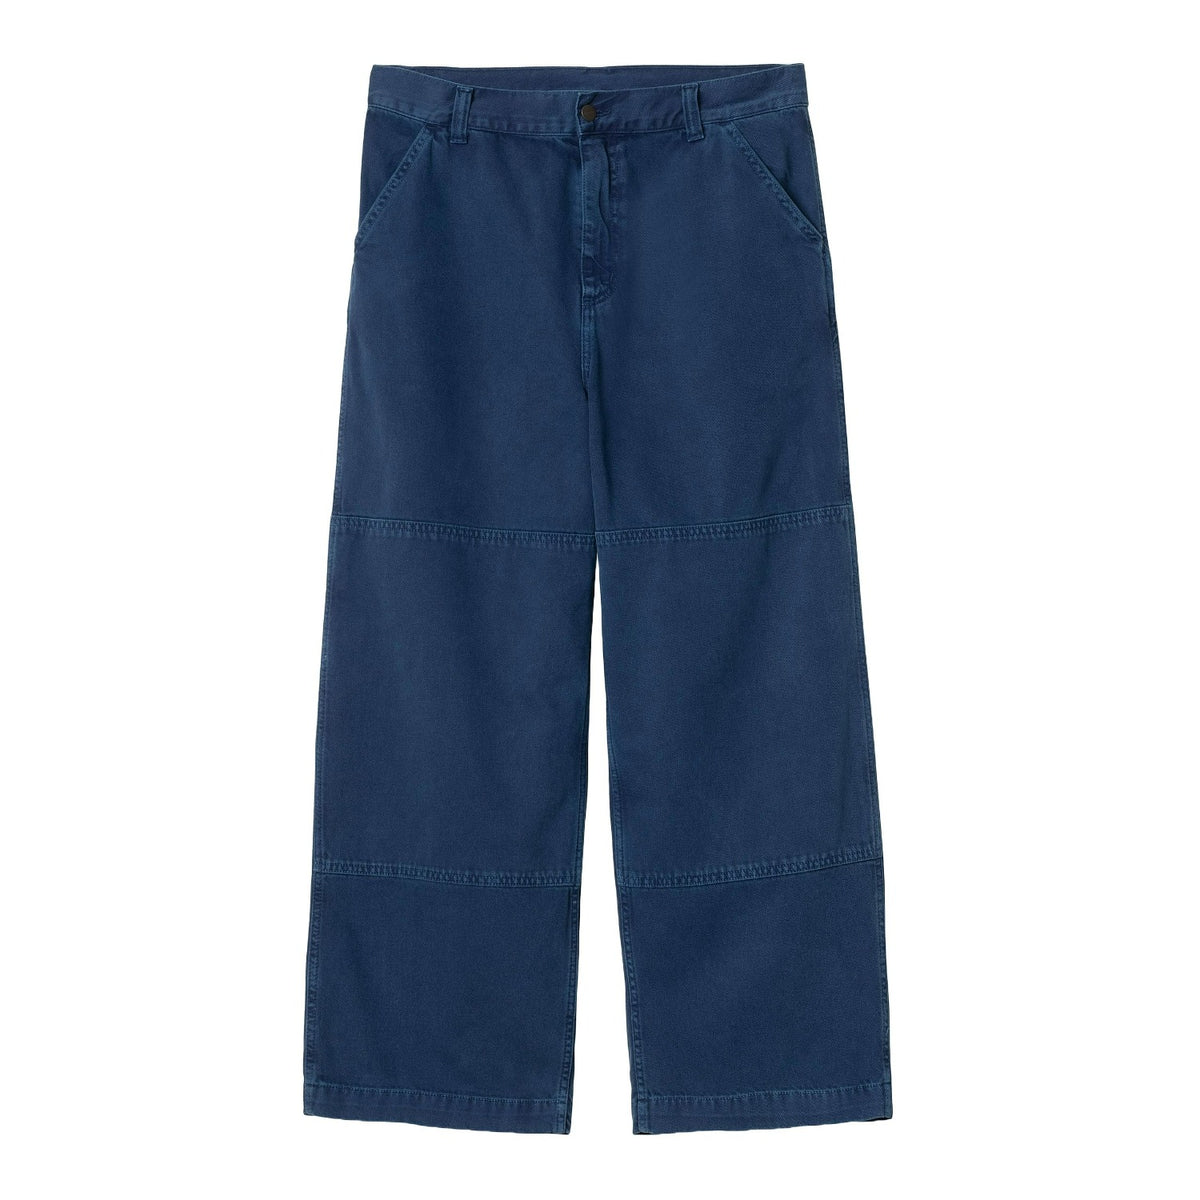 Carhartt Wip Men's Garrison Pants Blue